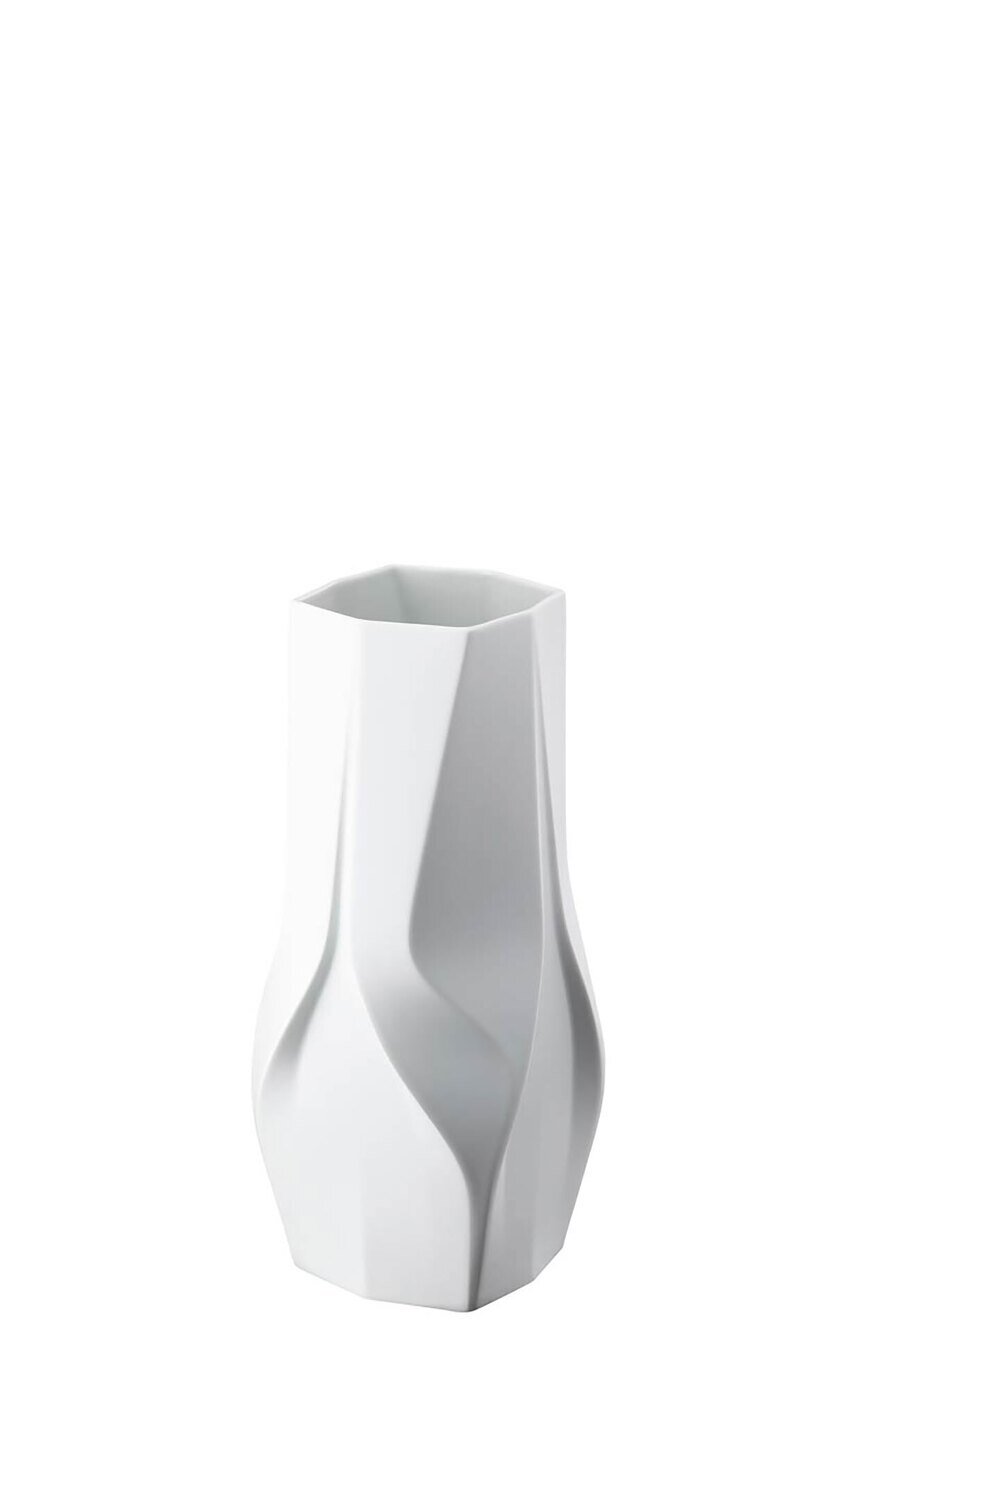 Rosenthal Weave White- Zaha Hadid Vase 13 3/4 Inchch